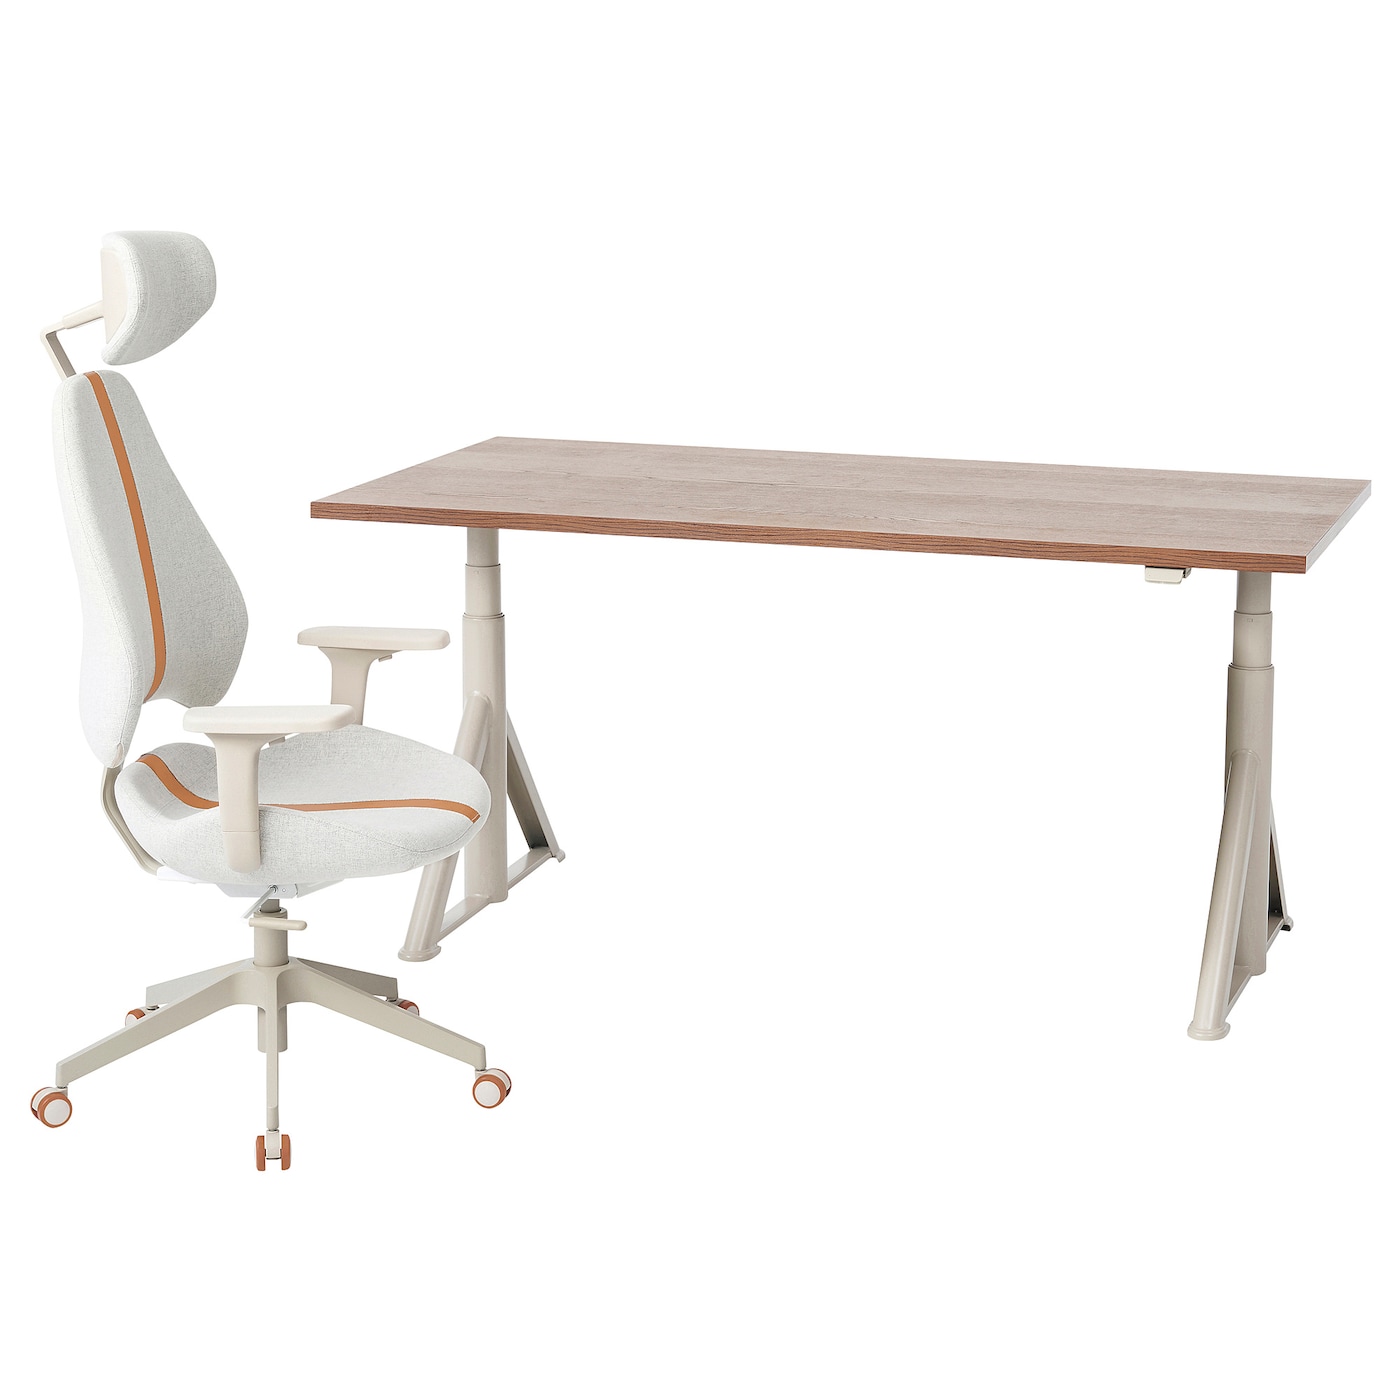 Стол и стул - IKEA IDÅSEN / GRUPPSPEL, 160х80 см, коричневый/белый, ИДОСЕН/МАТЧСПЕЛ ИКЕА